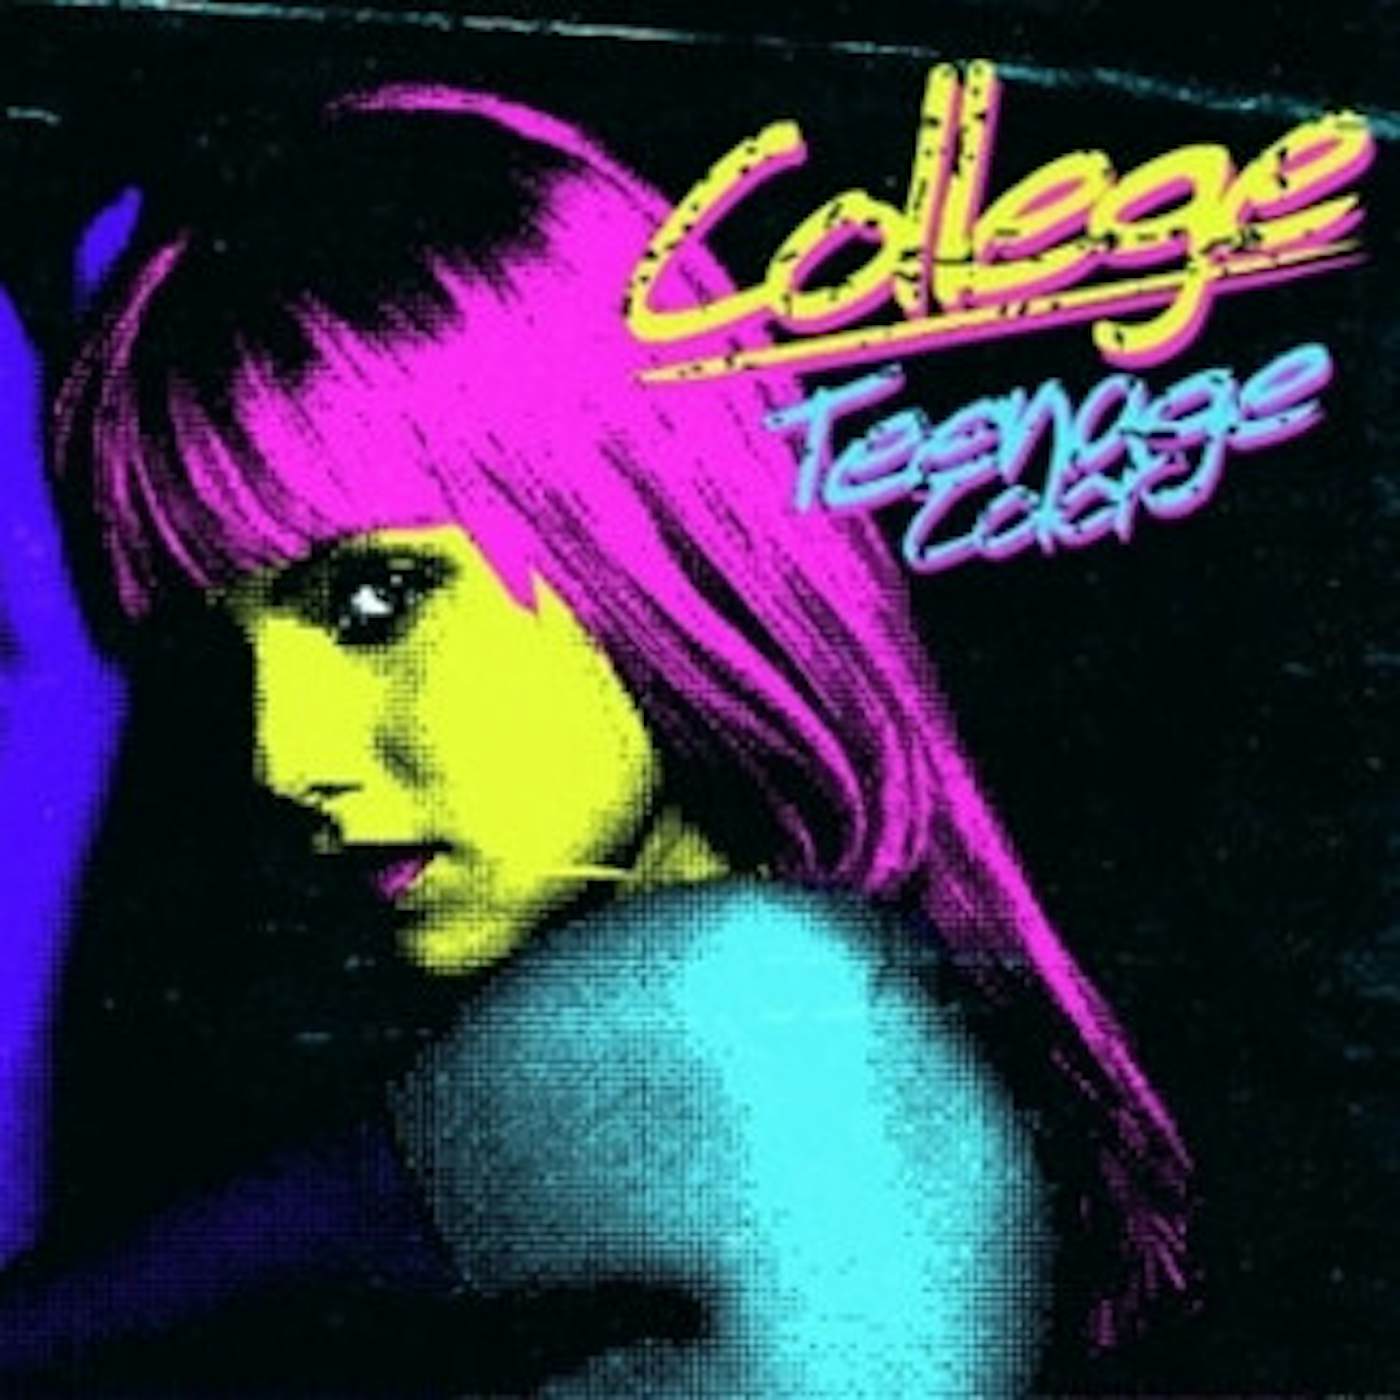 College Teenage Colour Vinyl Record